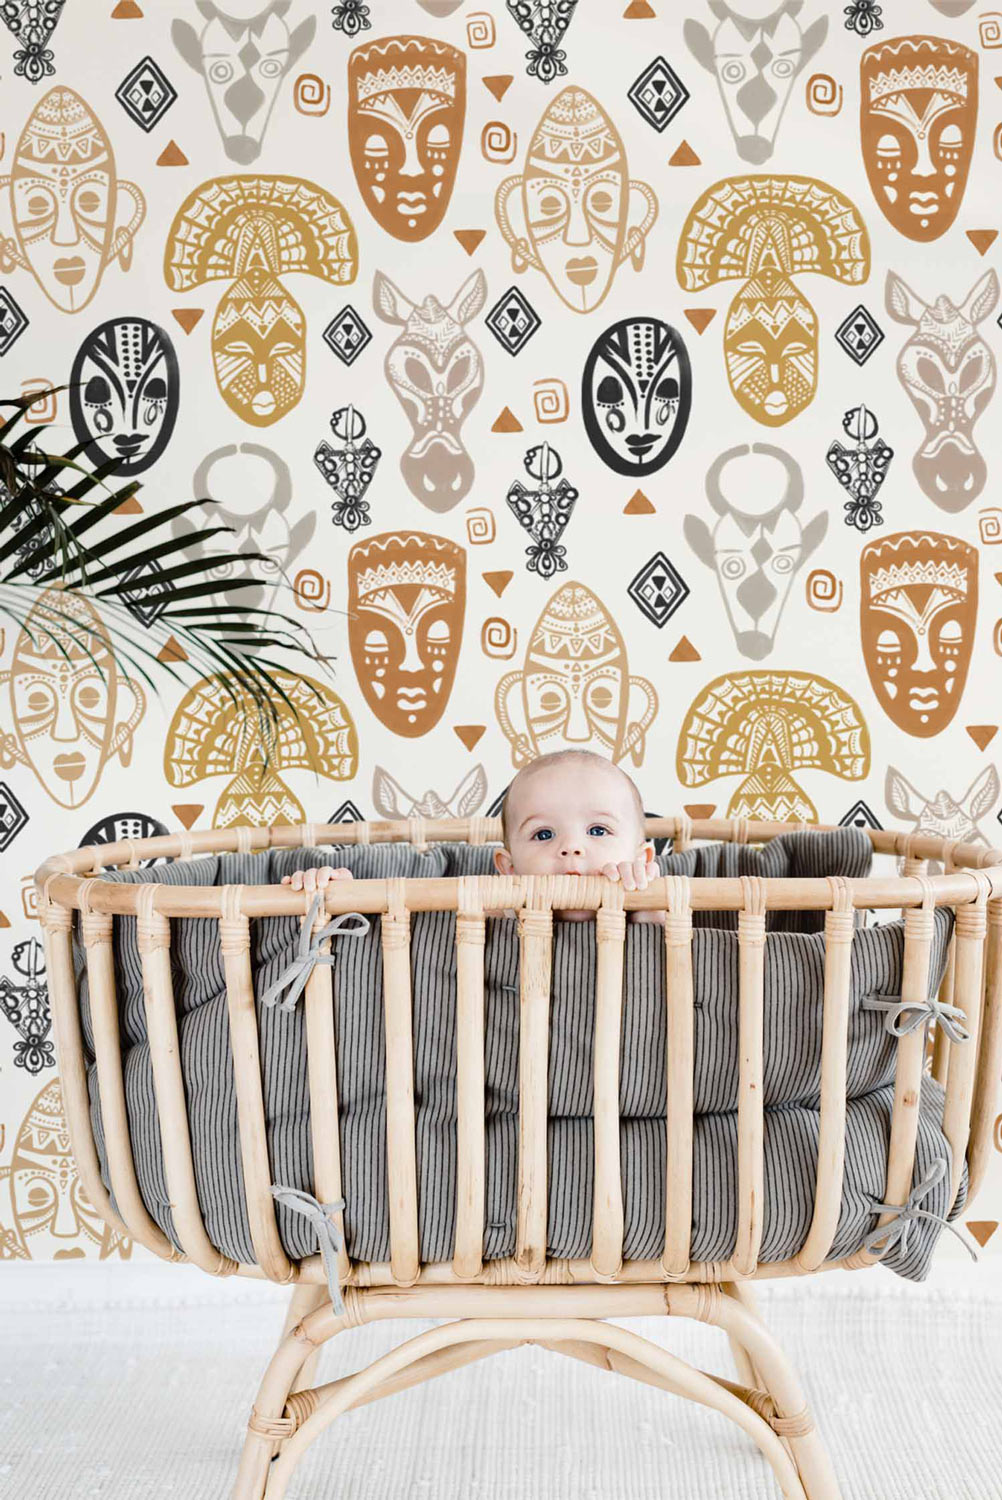 Livettes wallpaper tribal masks wallpaper design in baby nursery